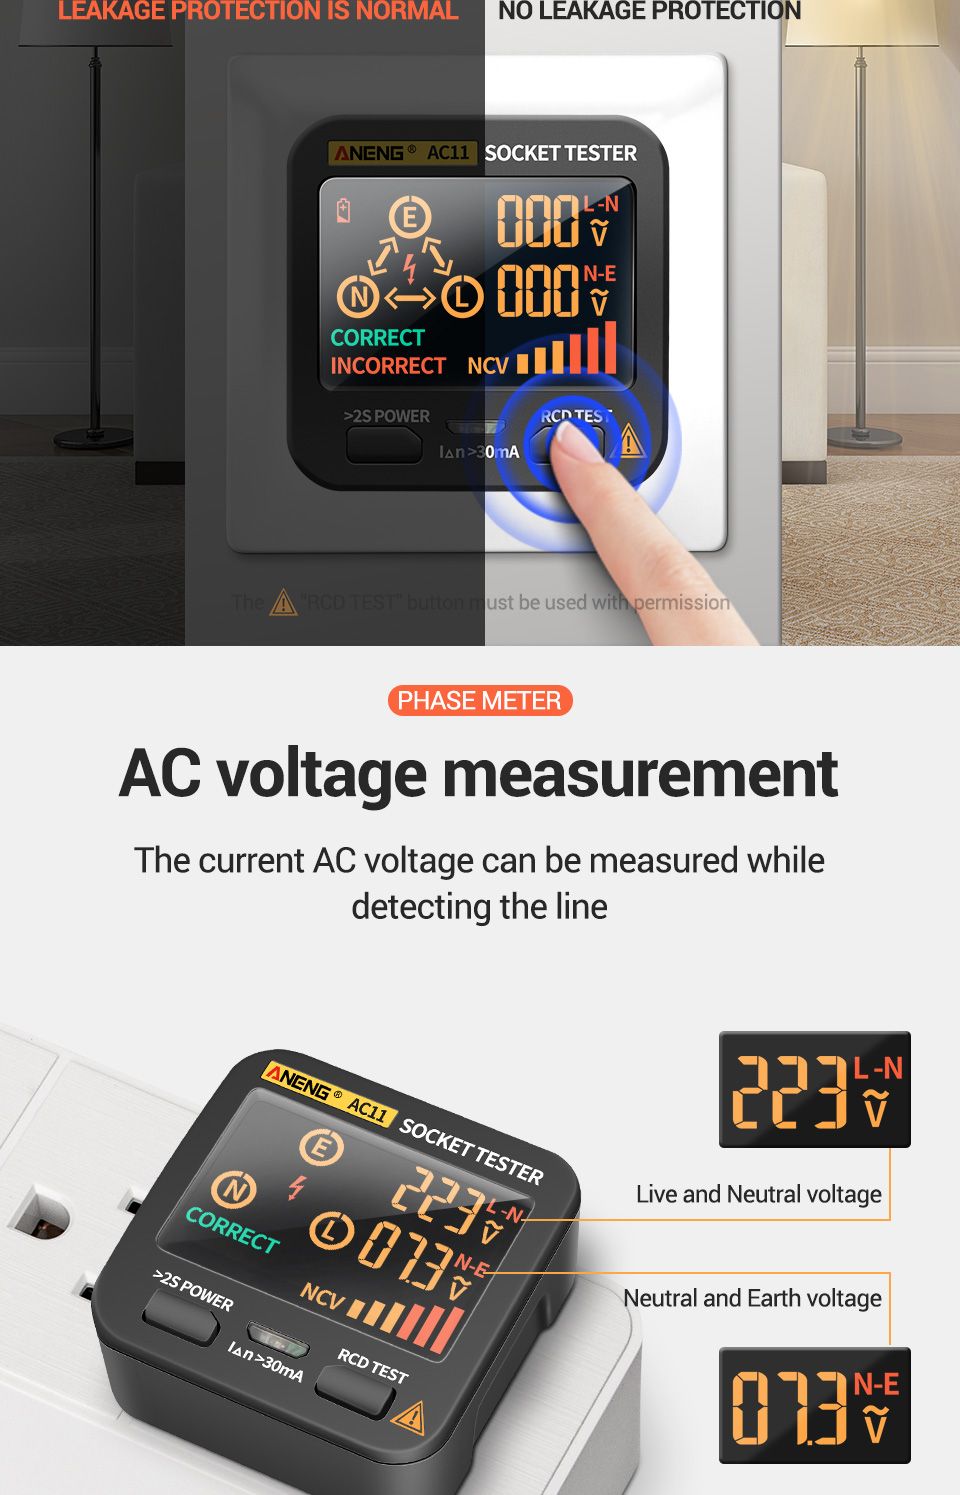 ANENG-AC11-LED-Screen-Muti-function-Socket-Tester-Phase-Meter-Phase-Polarity-Detector-01V250V-AC-Vol-1713250